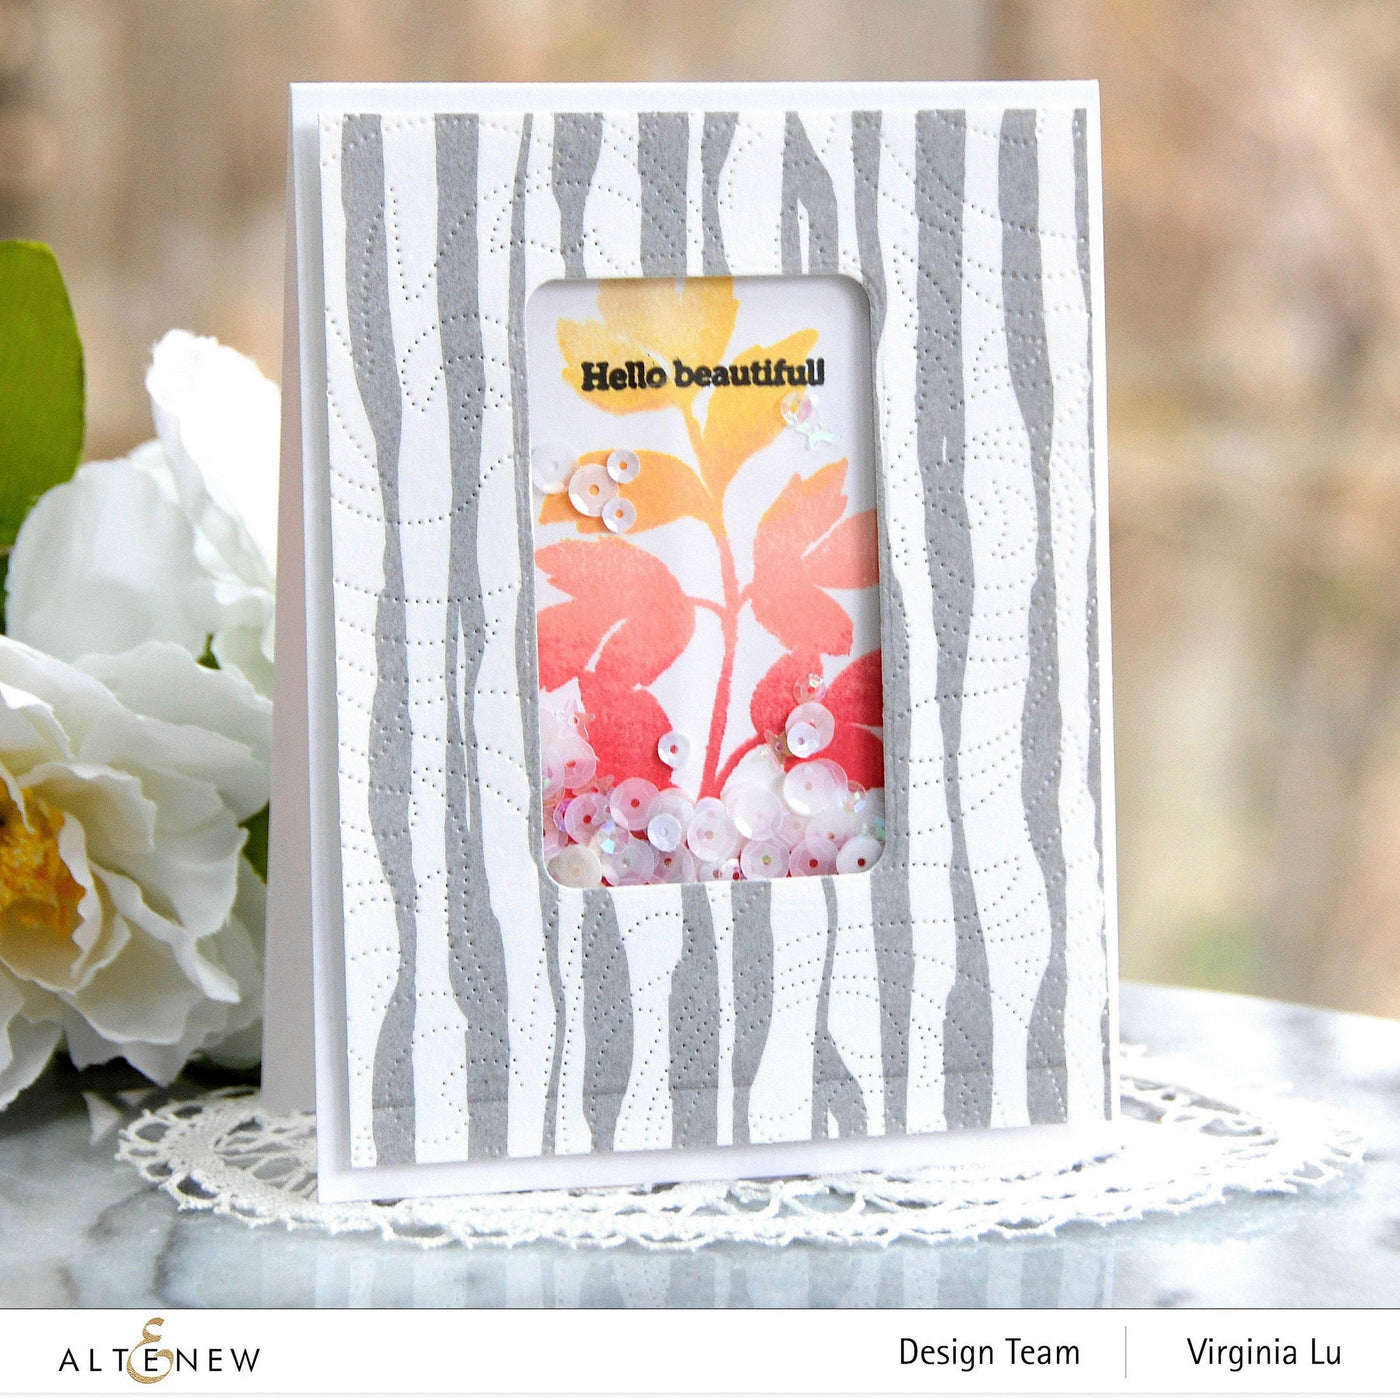 Altenew Creativity Kit Bundle Courageous Blooms Creativity Cardmaking Kit